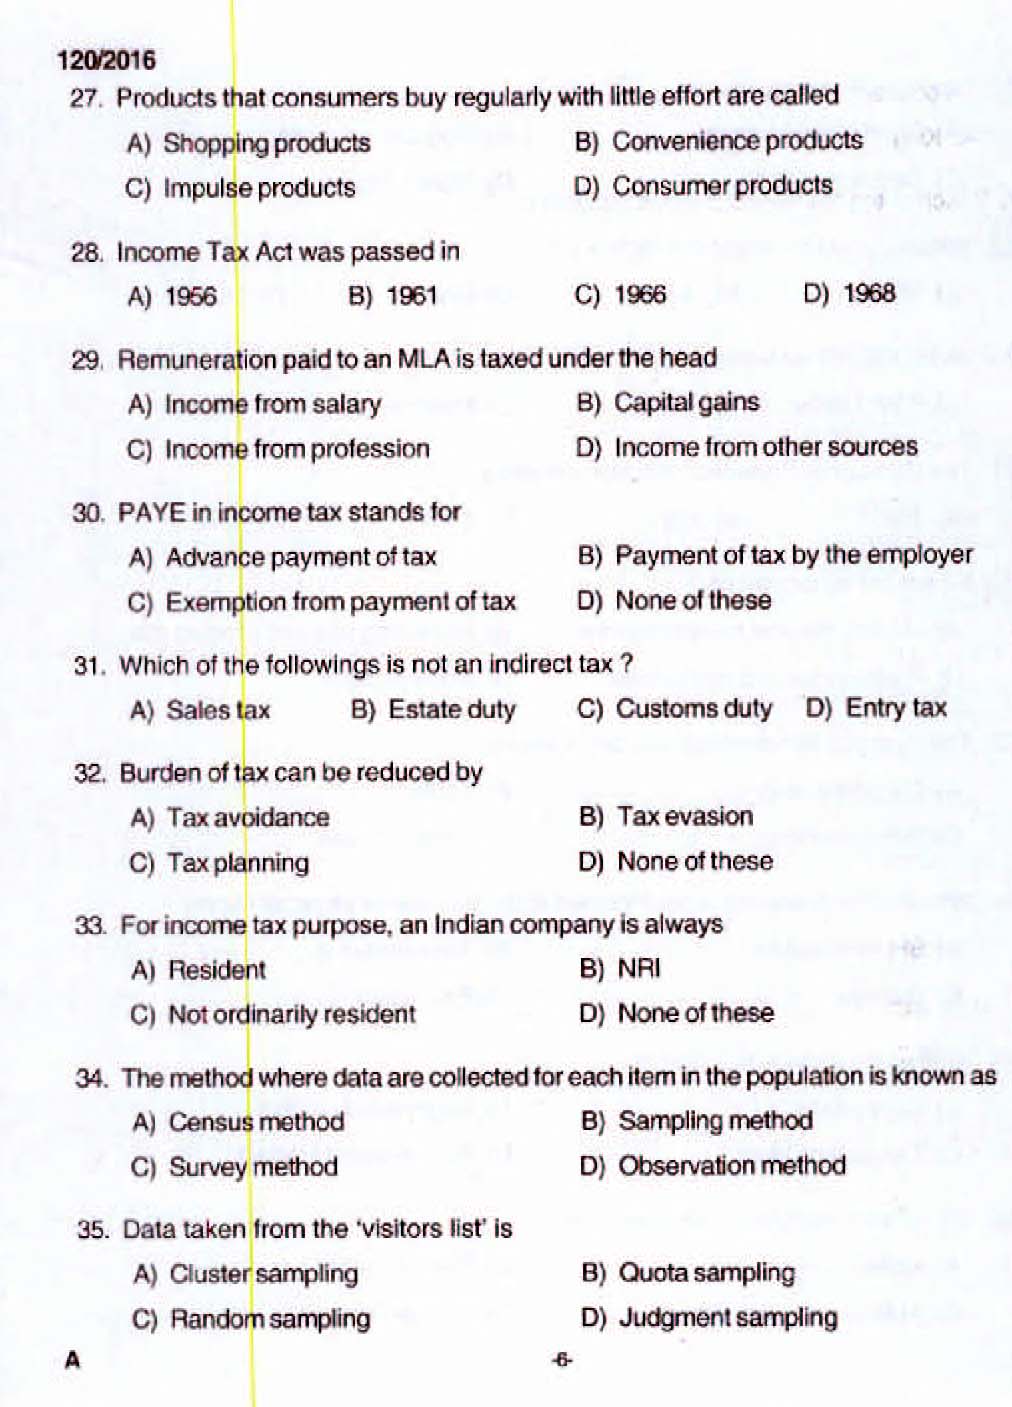 Kerala PSC Accountant Grade III OMR Exam 2016 Question Paper Code 1202016 4